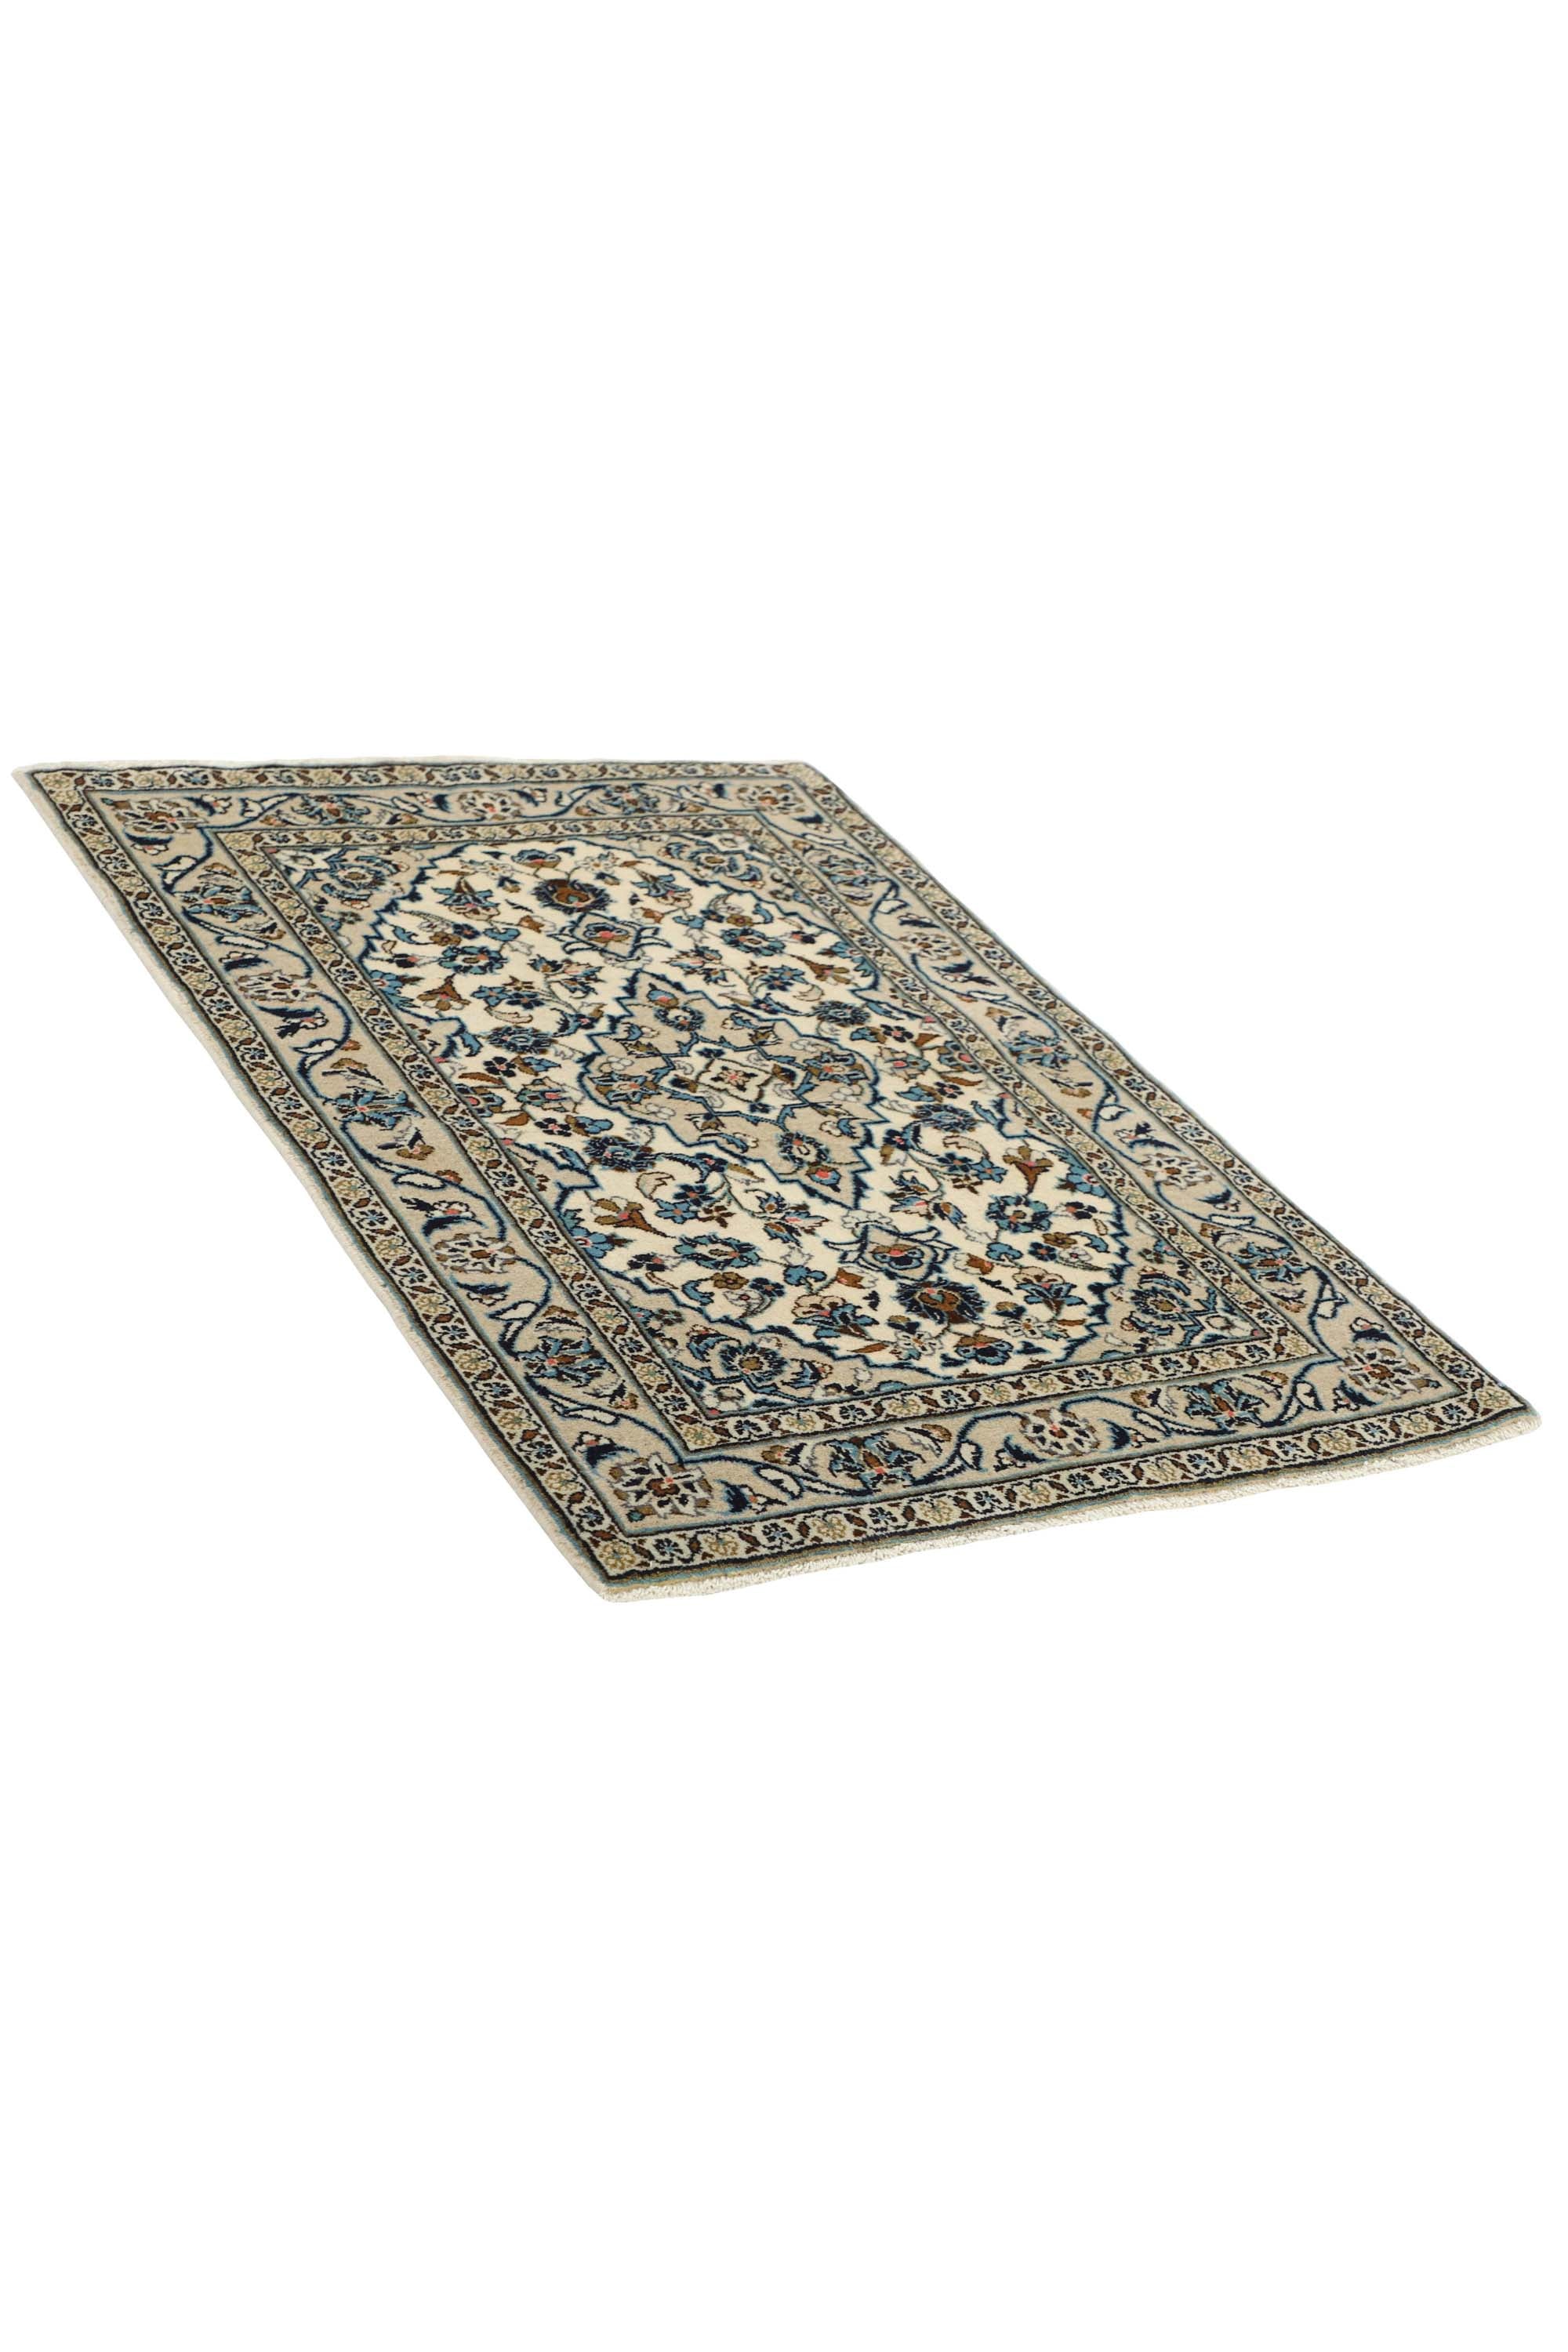 Cream and blue bordered Persian Keshan Fine rug